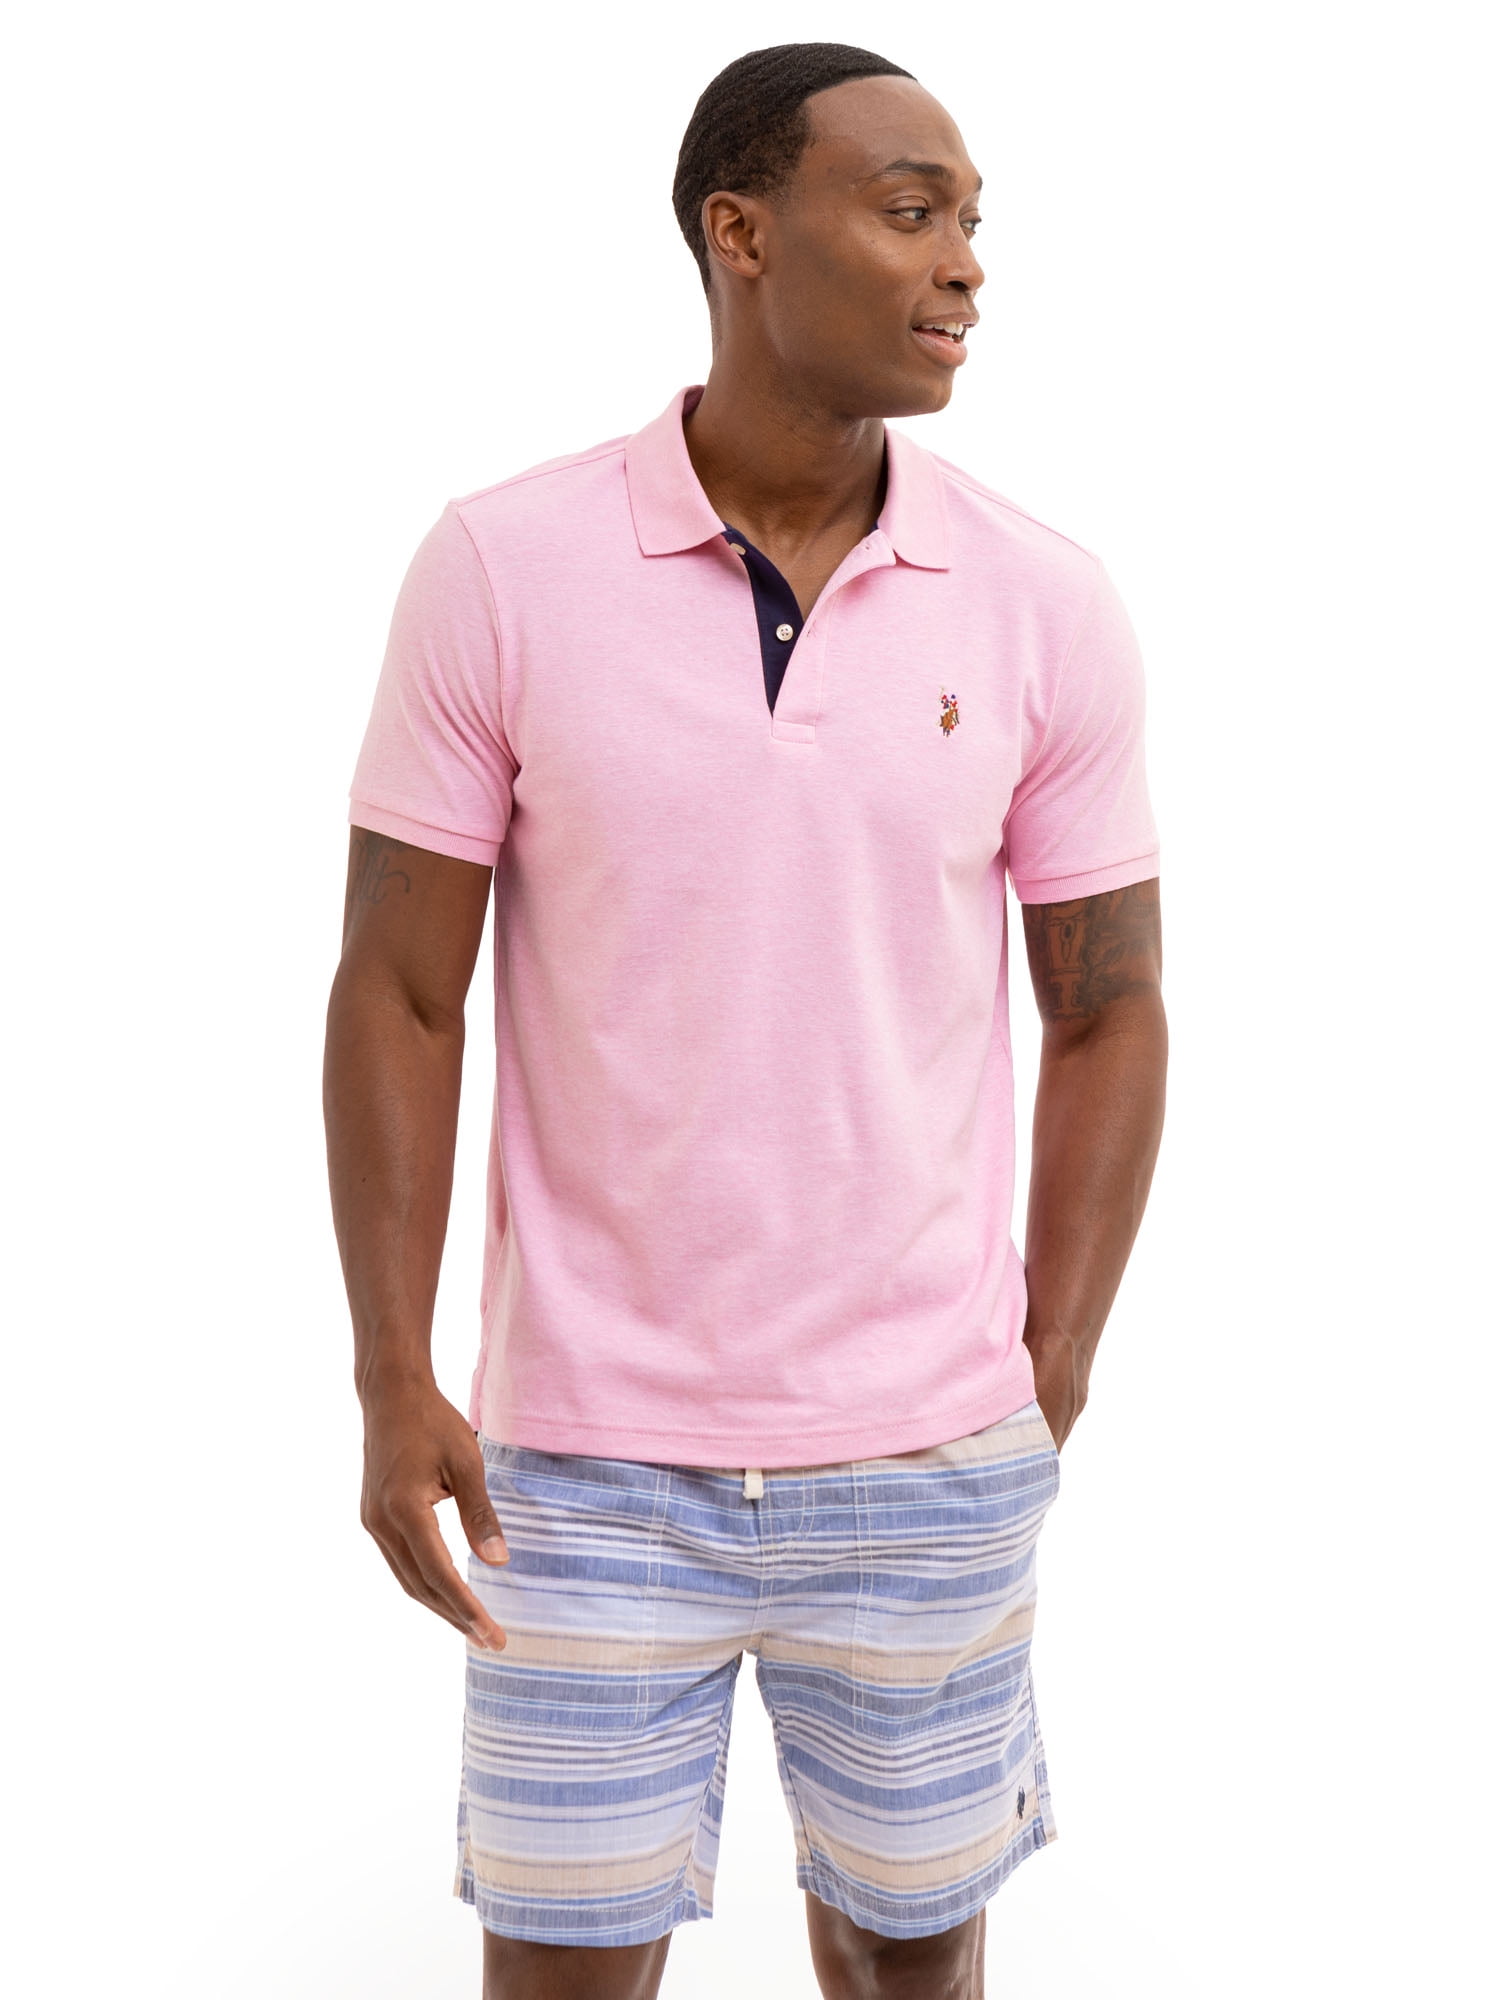 U.S. Polo Assn. Mens Player 3 T-shirt in Orchid Pink Marl – U.S. Polo Assn.  UK